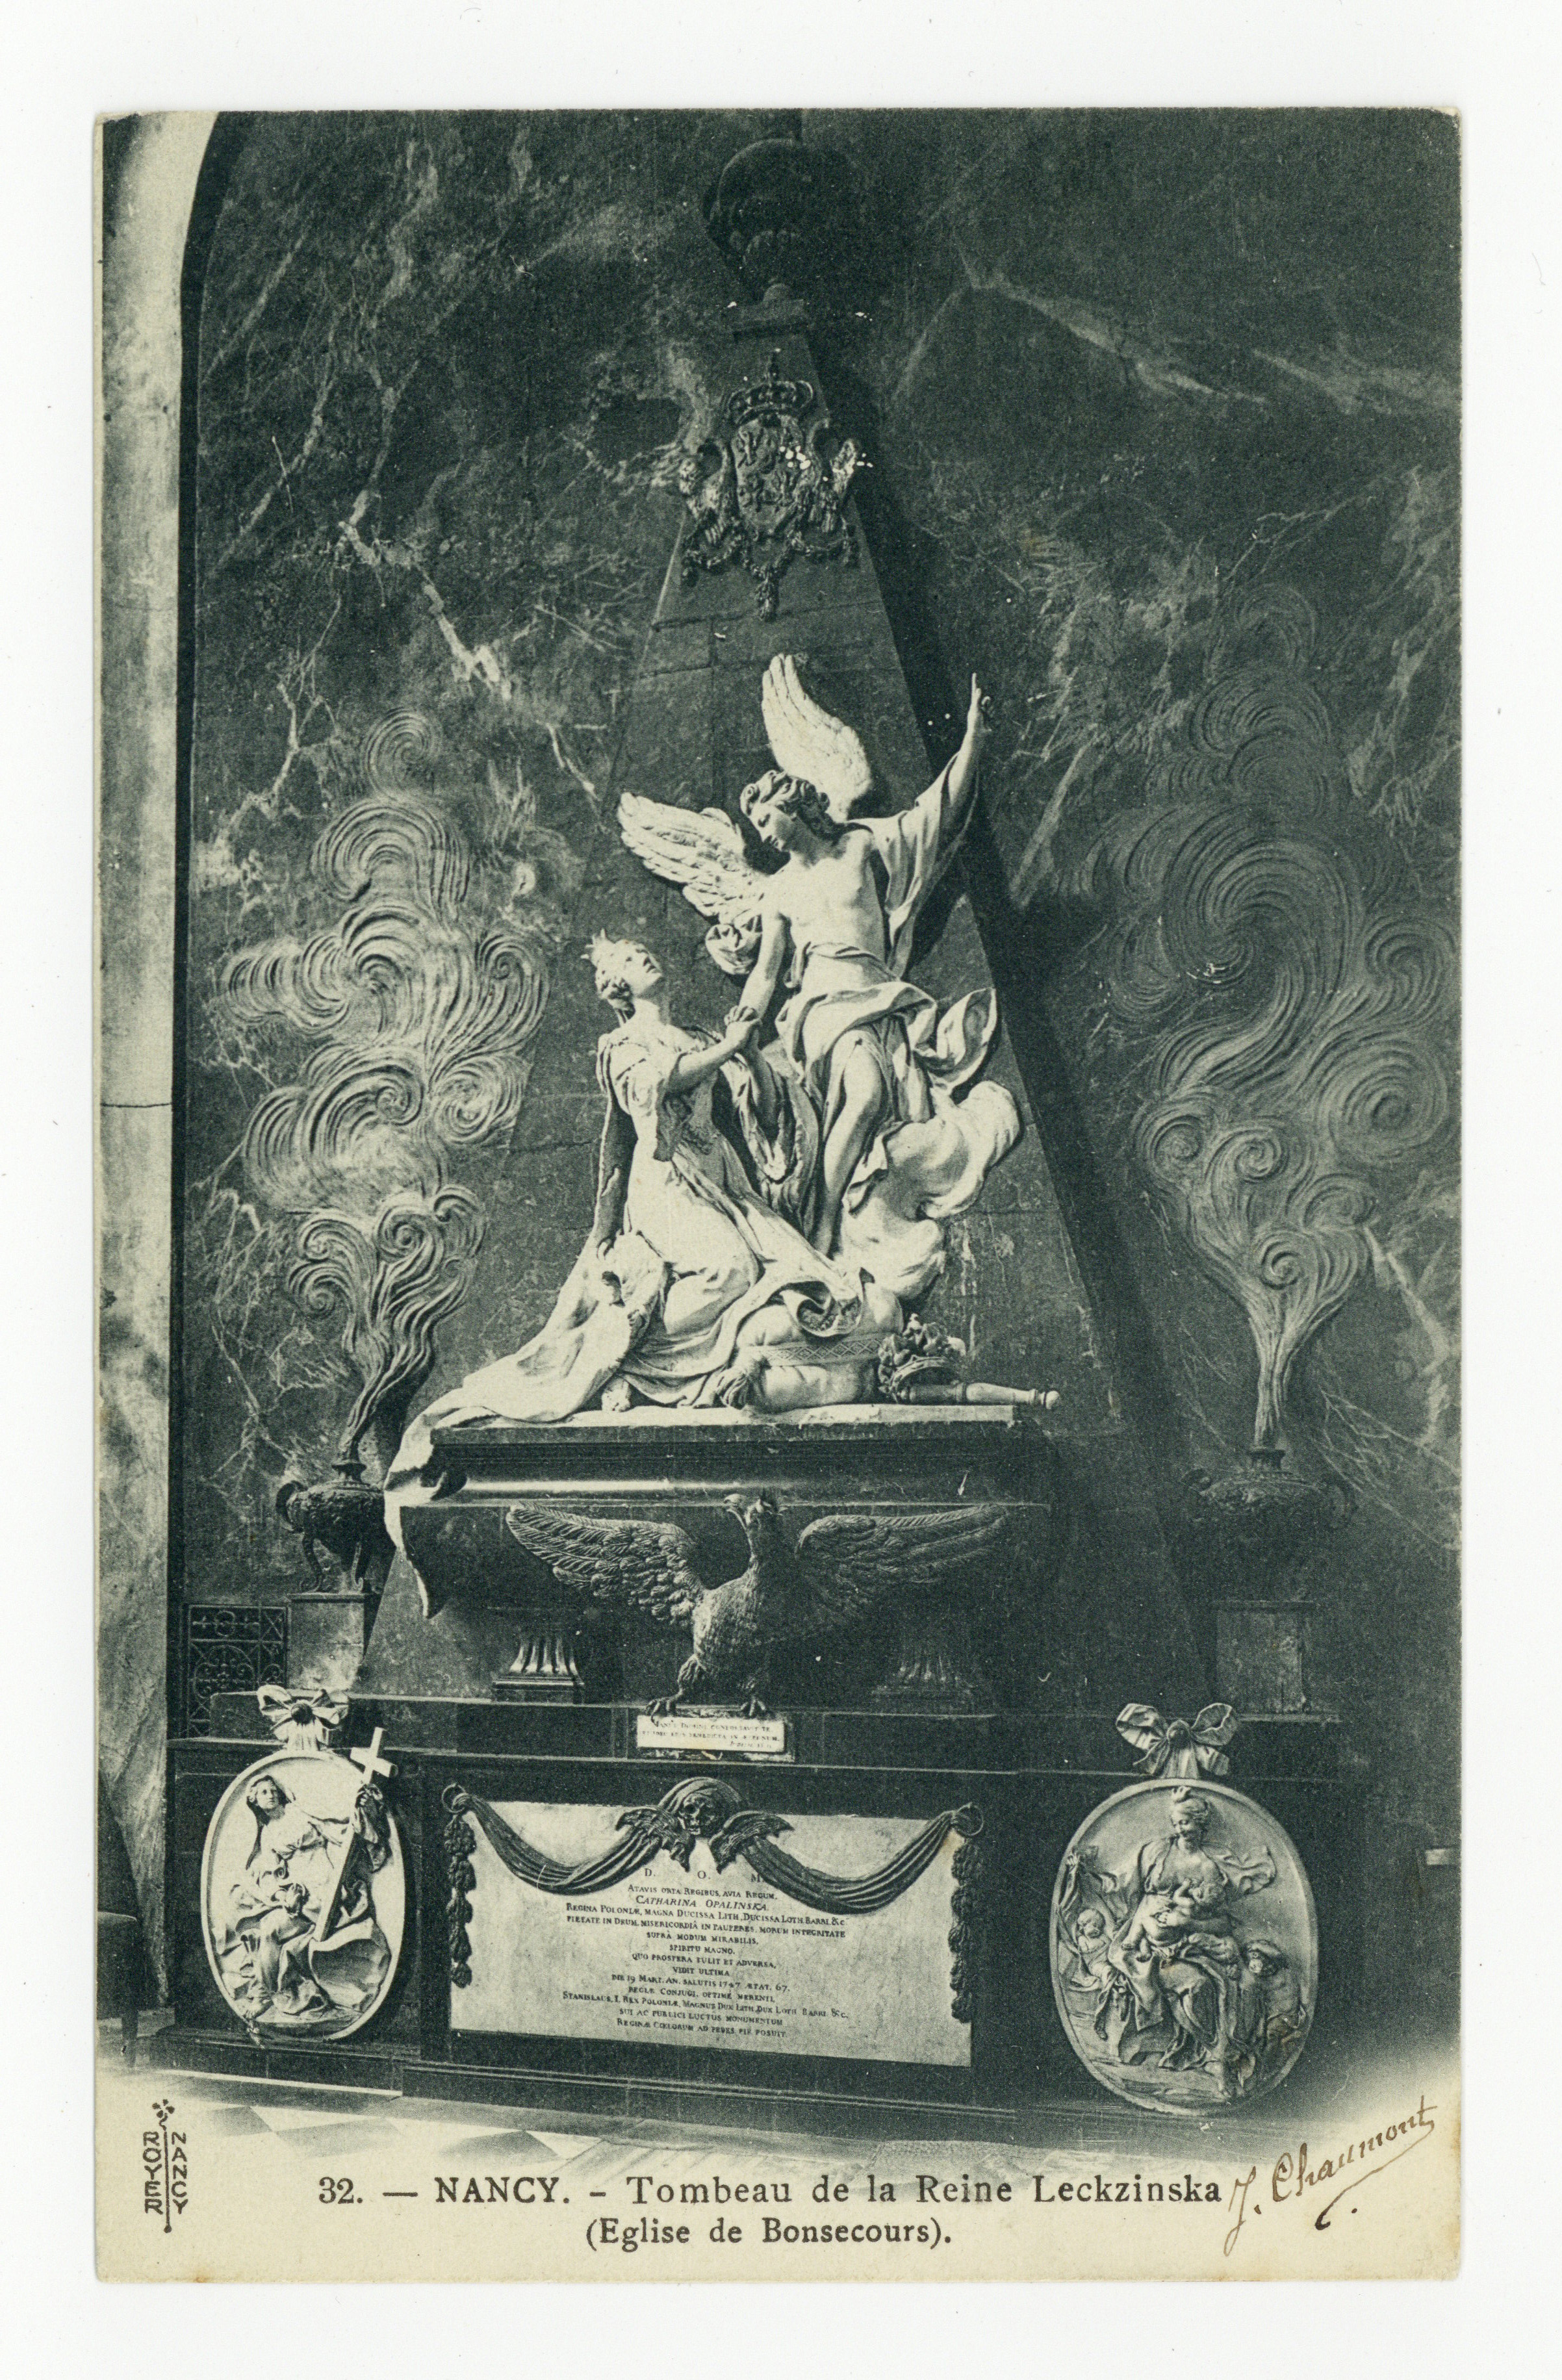 Contenu du Nancy : tombeau de la Reine Leckzinska (église de Bonsecours)